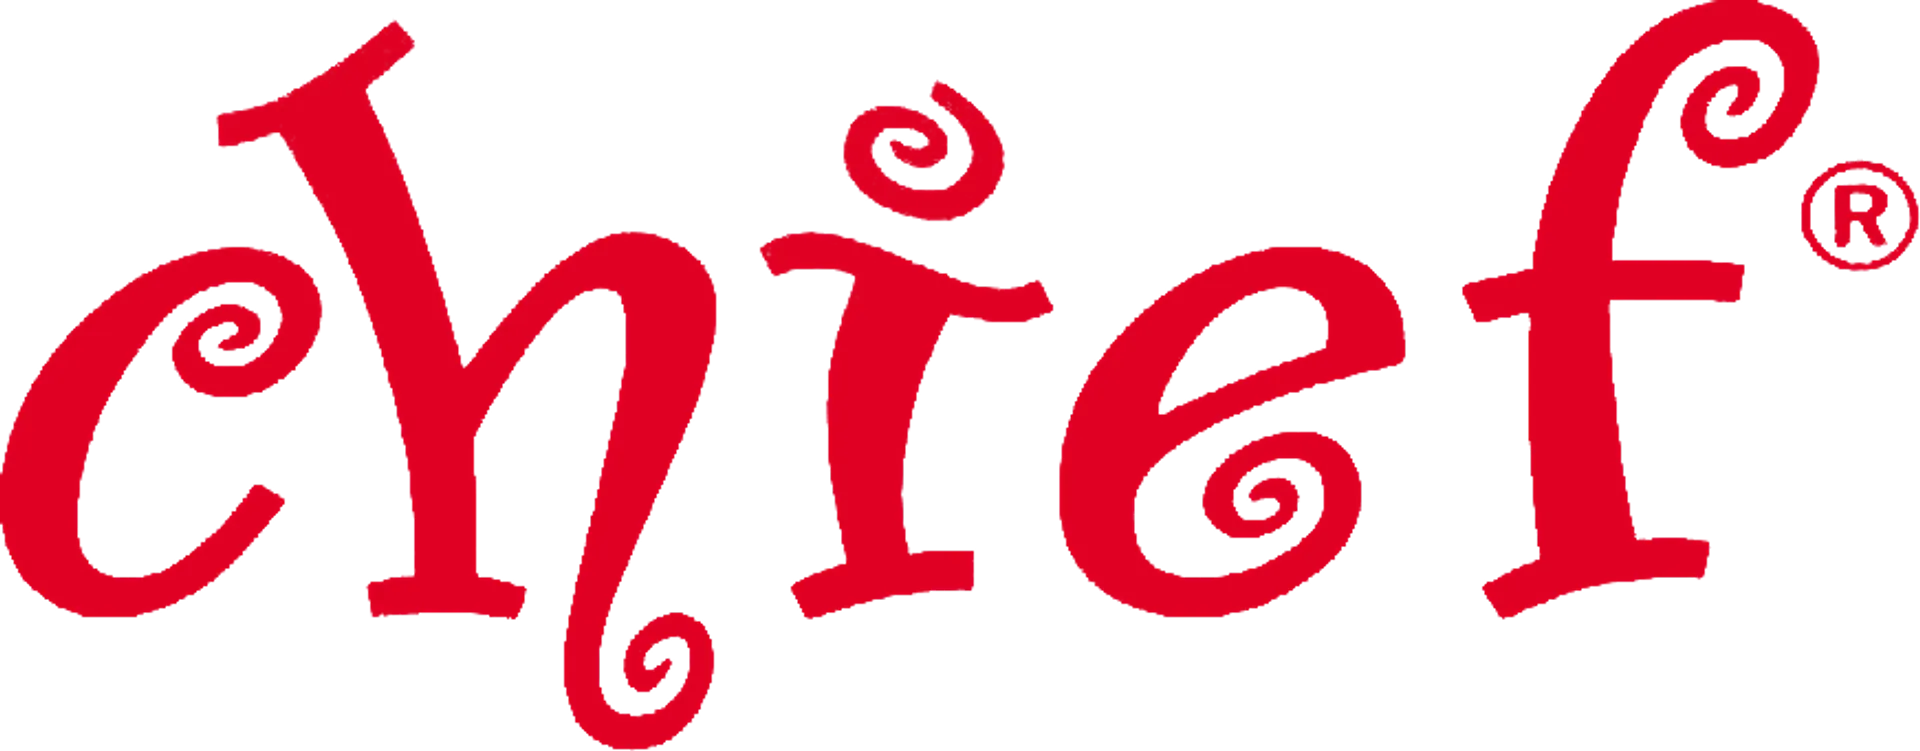 CHIEF logo